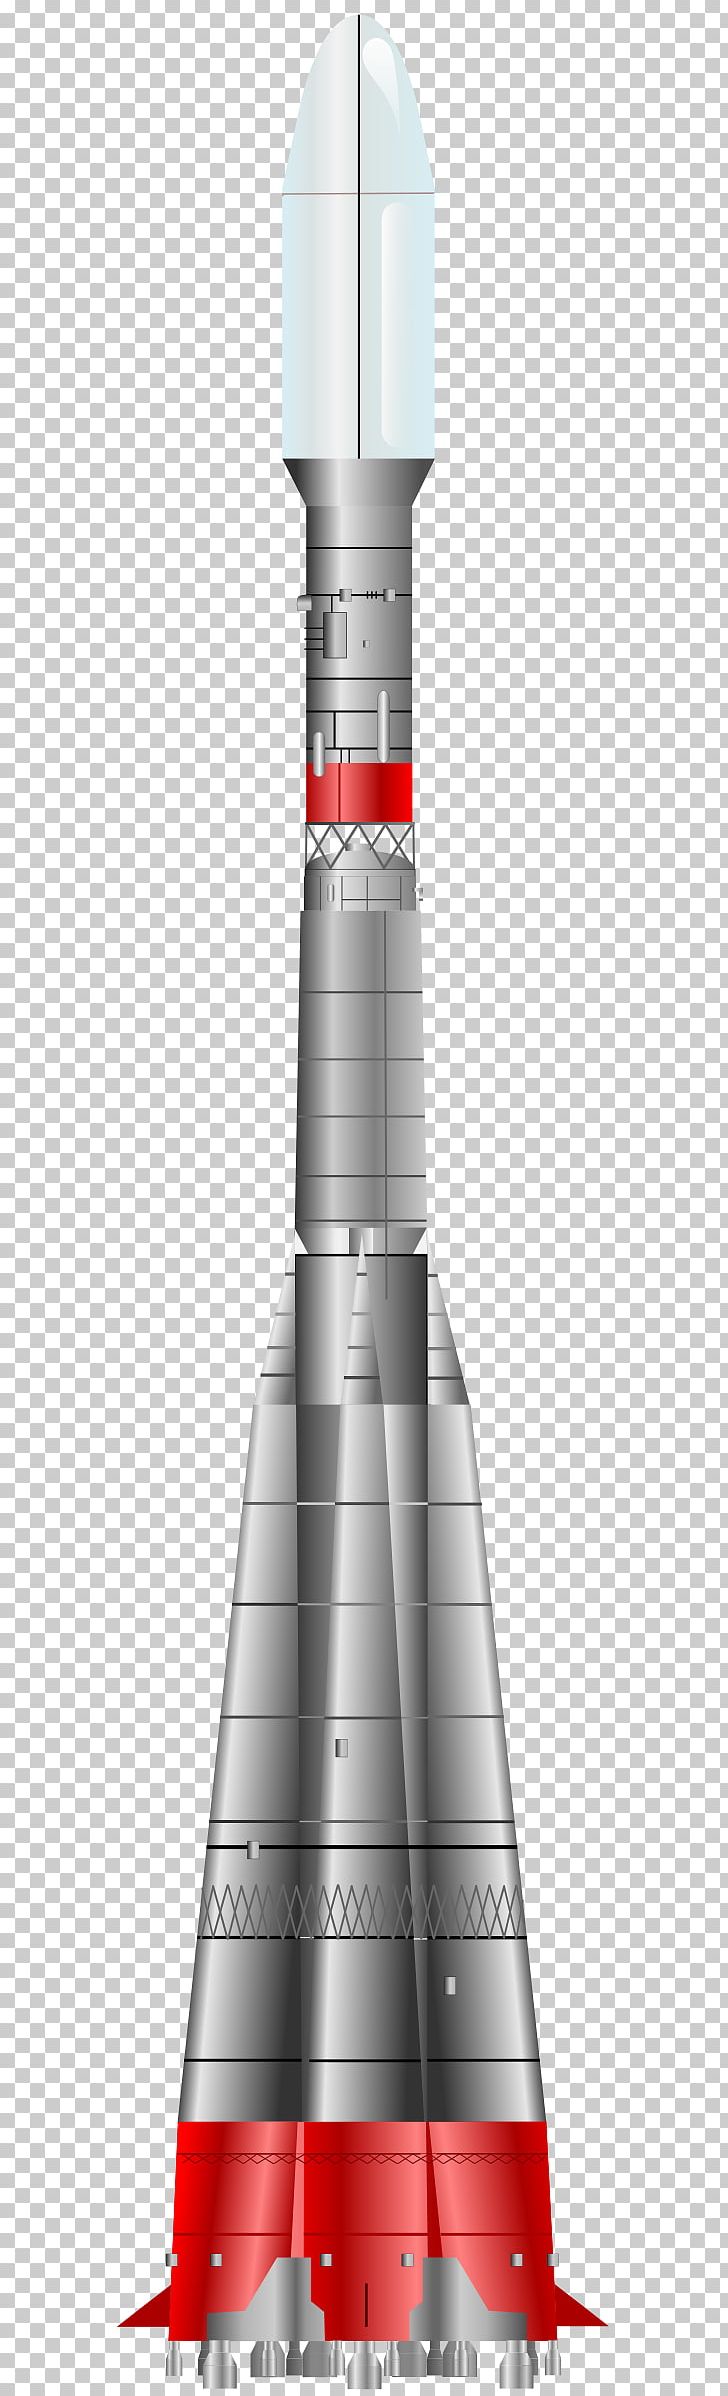 Soviet Space Program Soyuz Rocket Spacecraft PNG, Clipart, Computer Icons, Launch Vehicle, Rocket, Soviet Space Program, Soyuz Free PNG Download